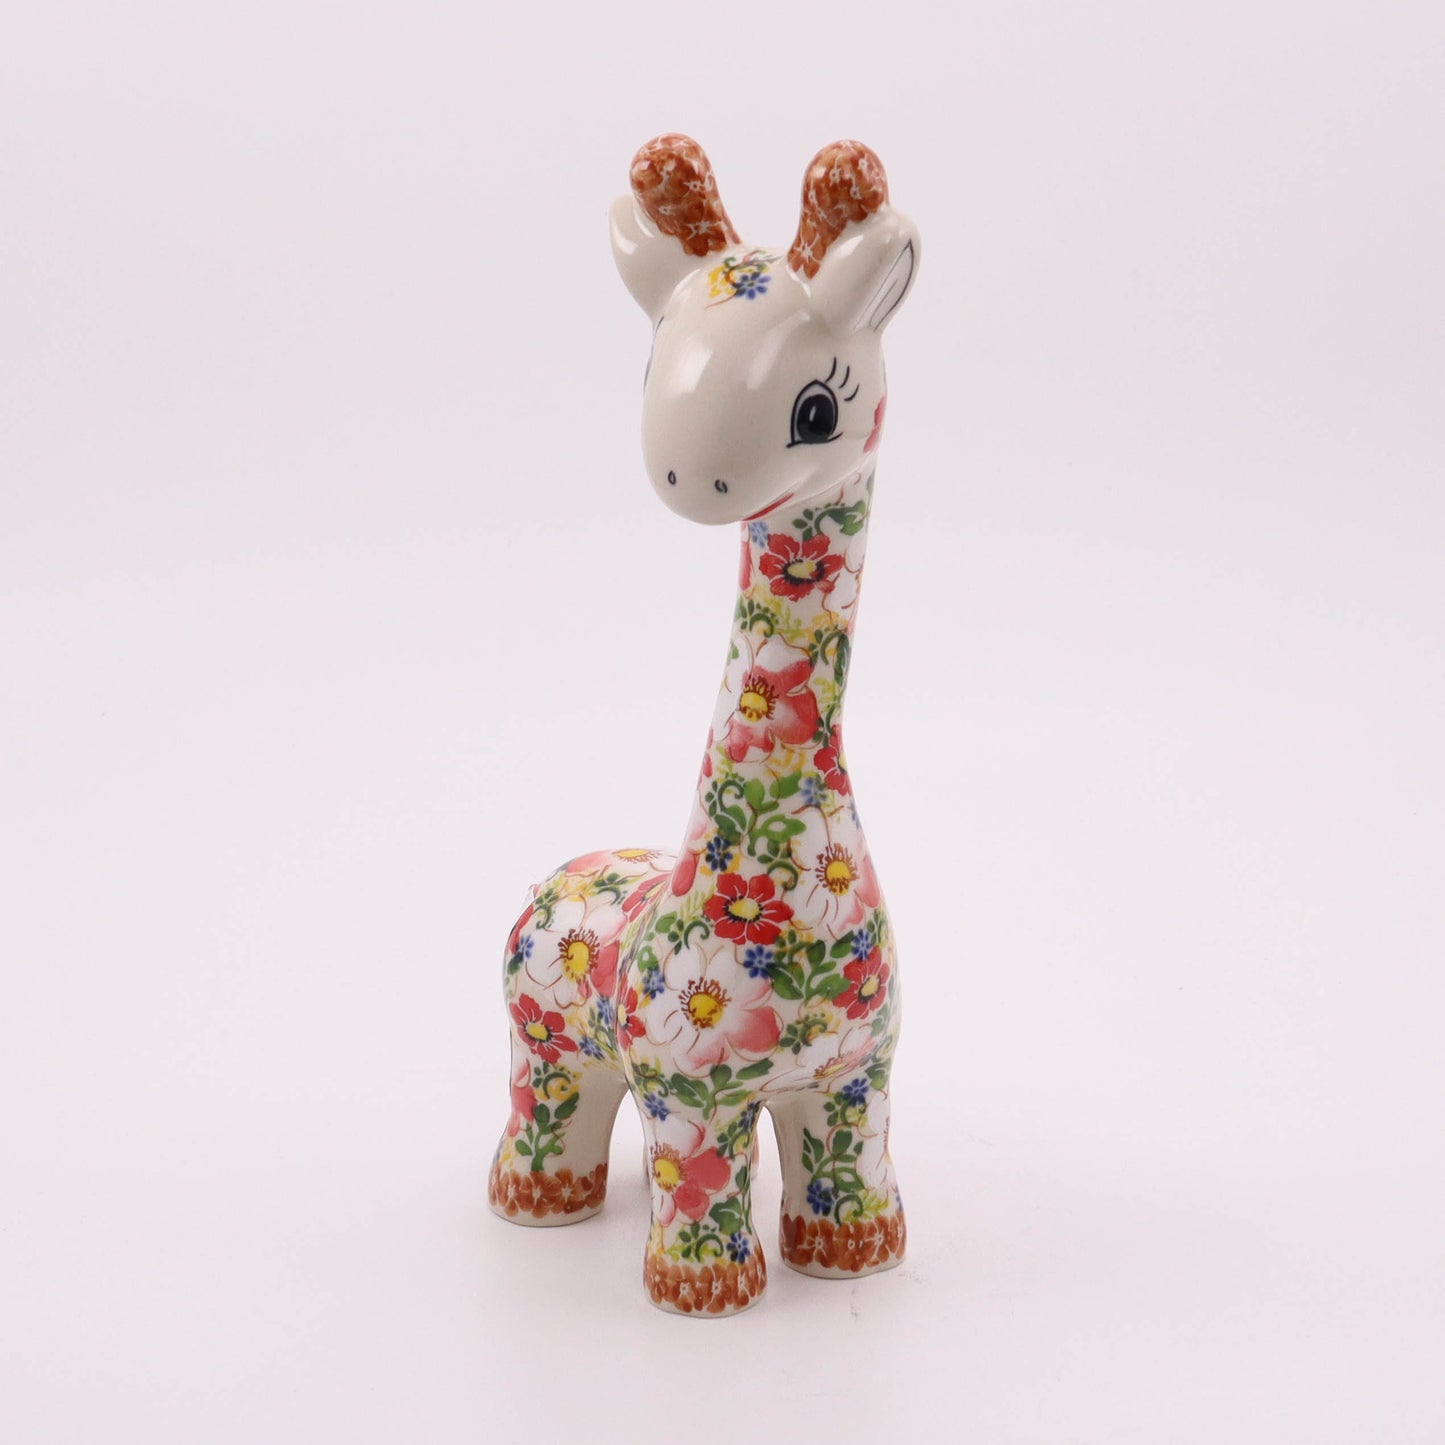 5"x3"x11" Giraffe Figurine. Pattern: Just Peachy